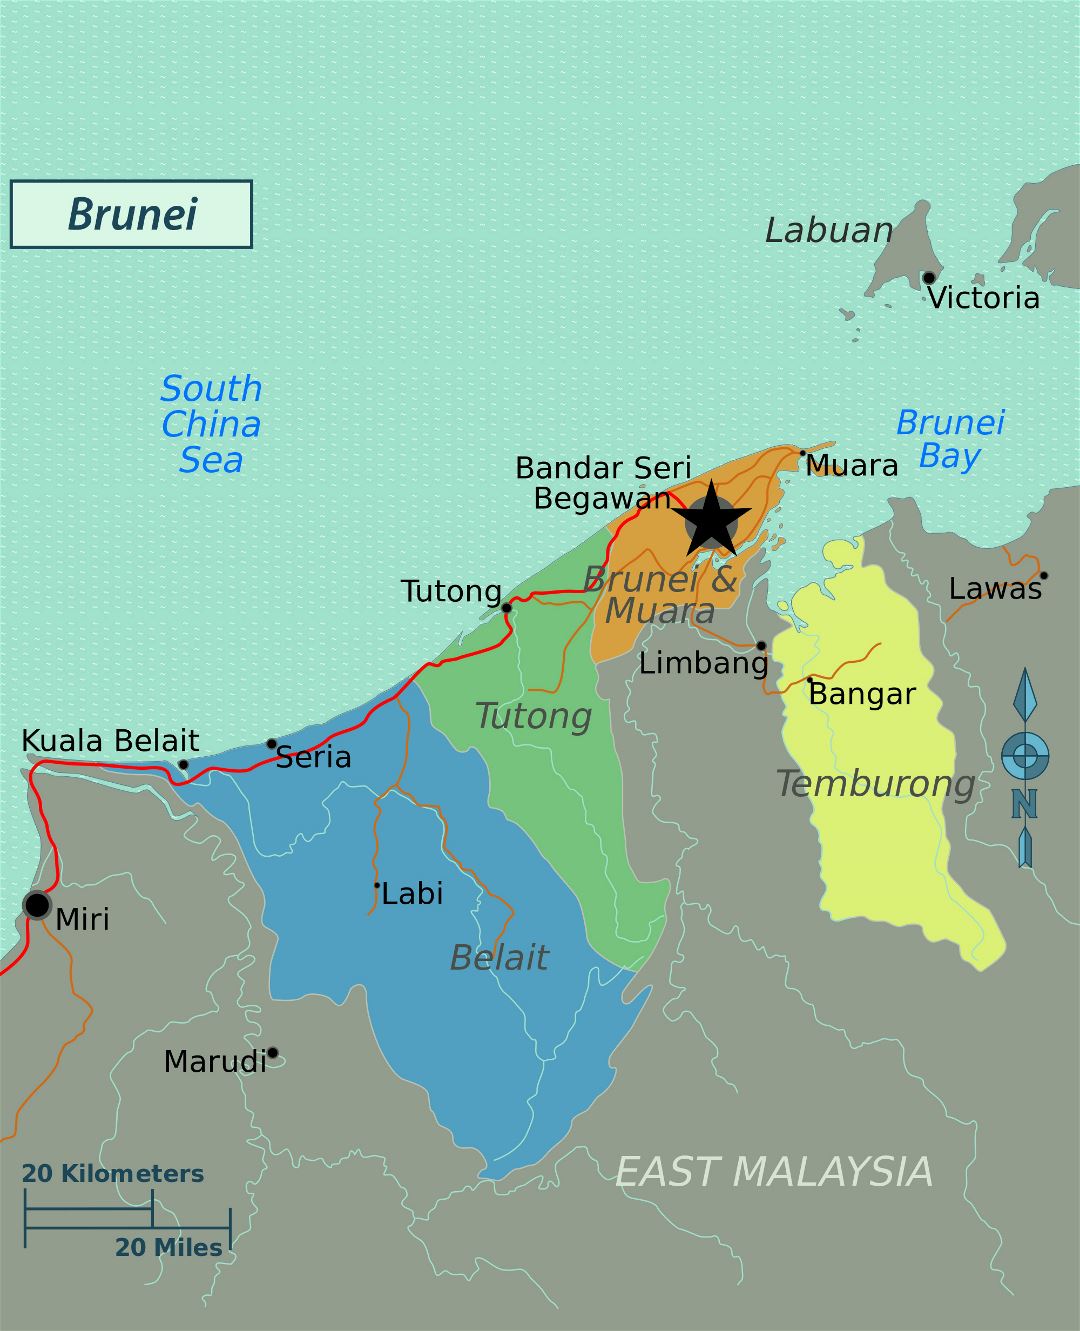 Large regions map of Brunei